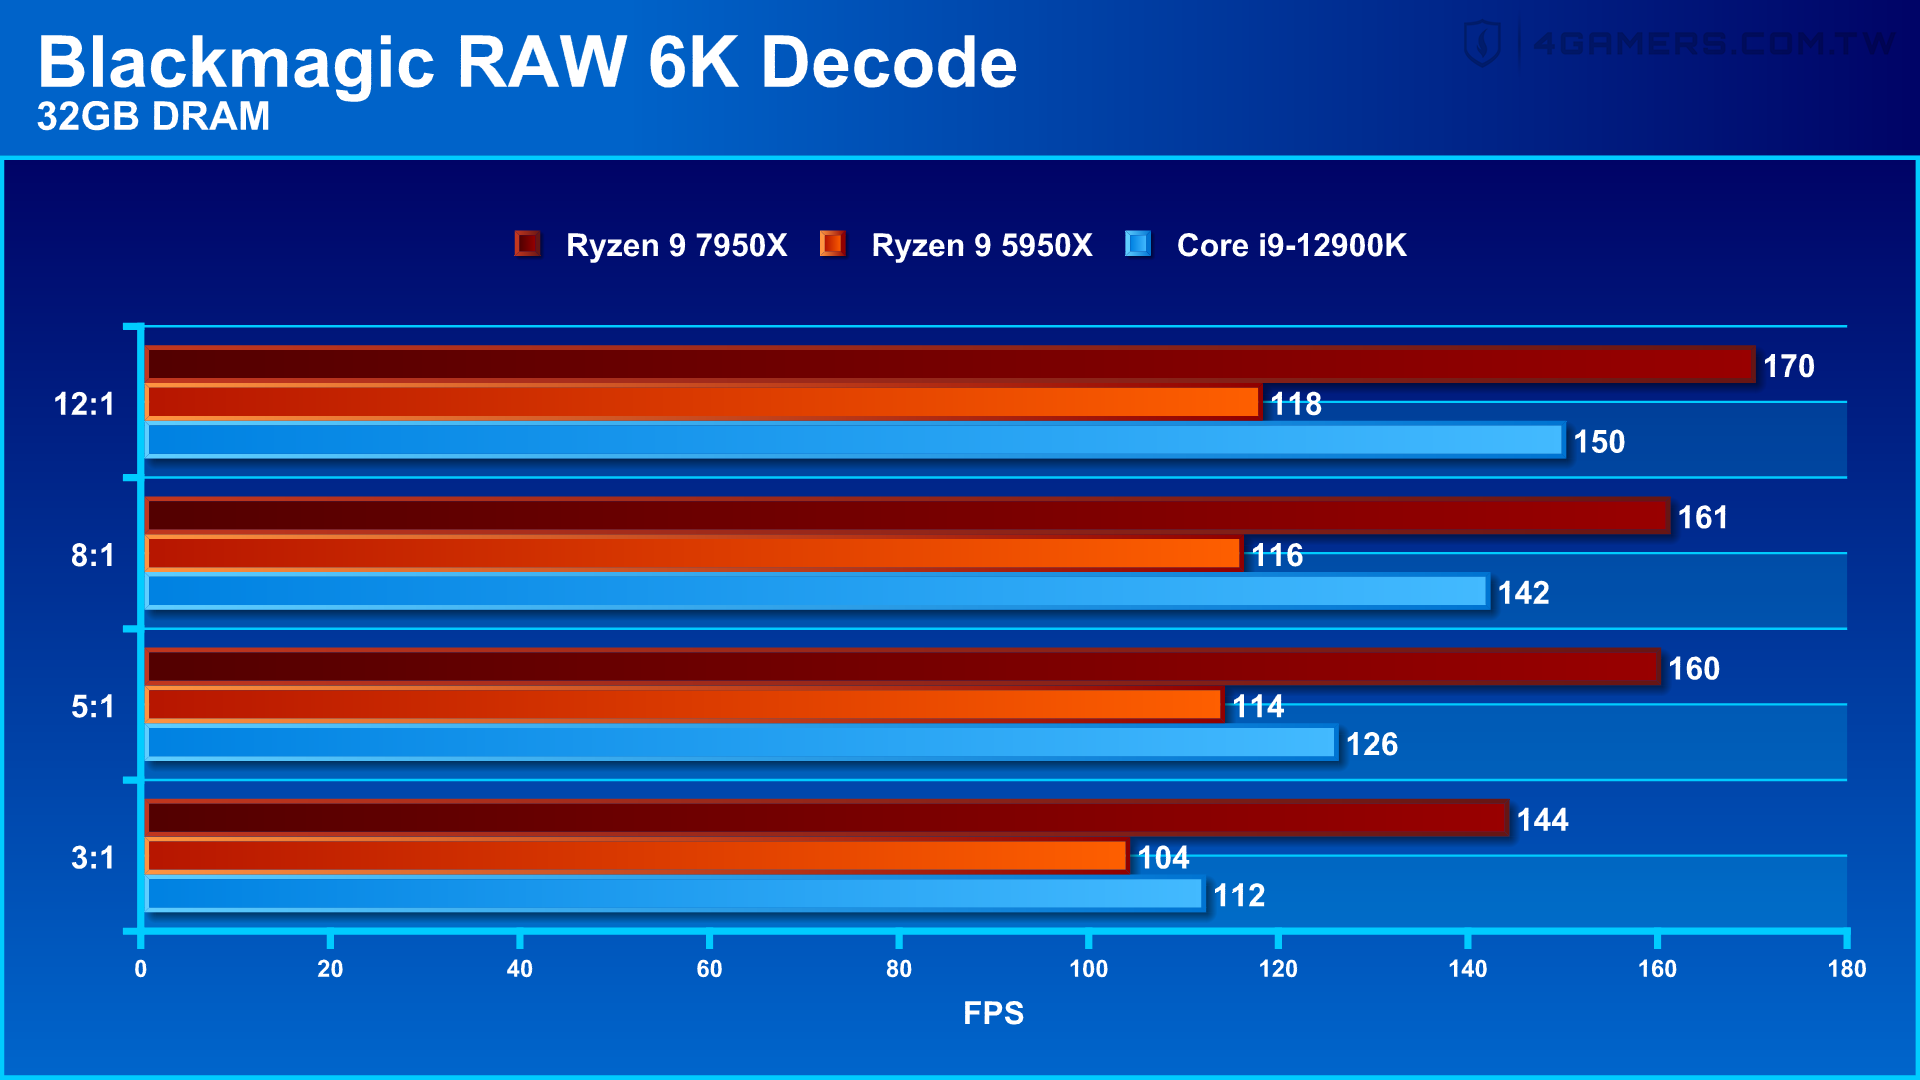 AMD Ryzen 9 7950X